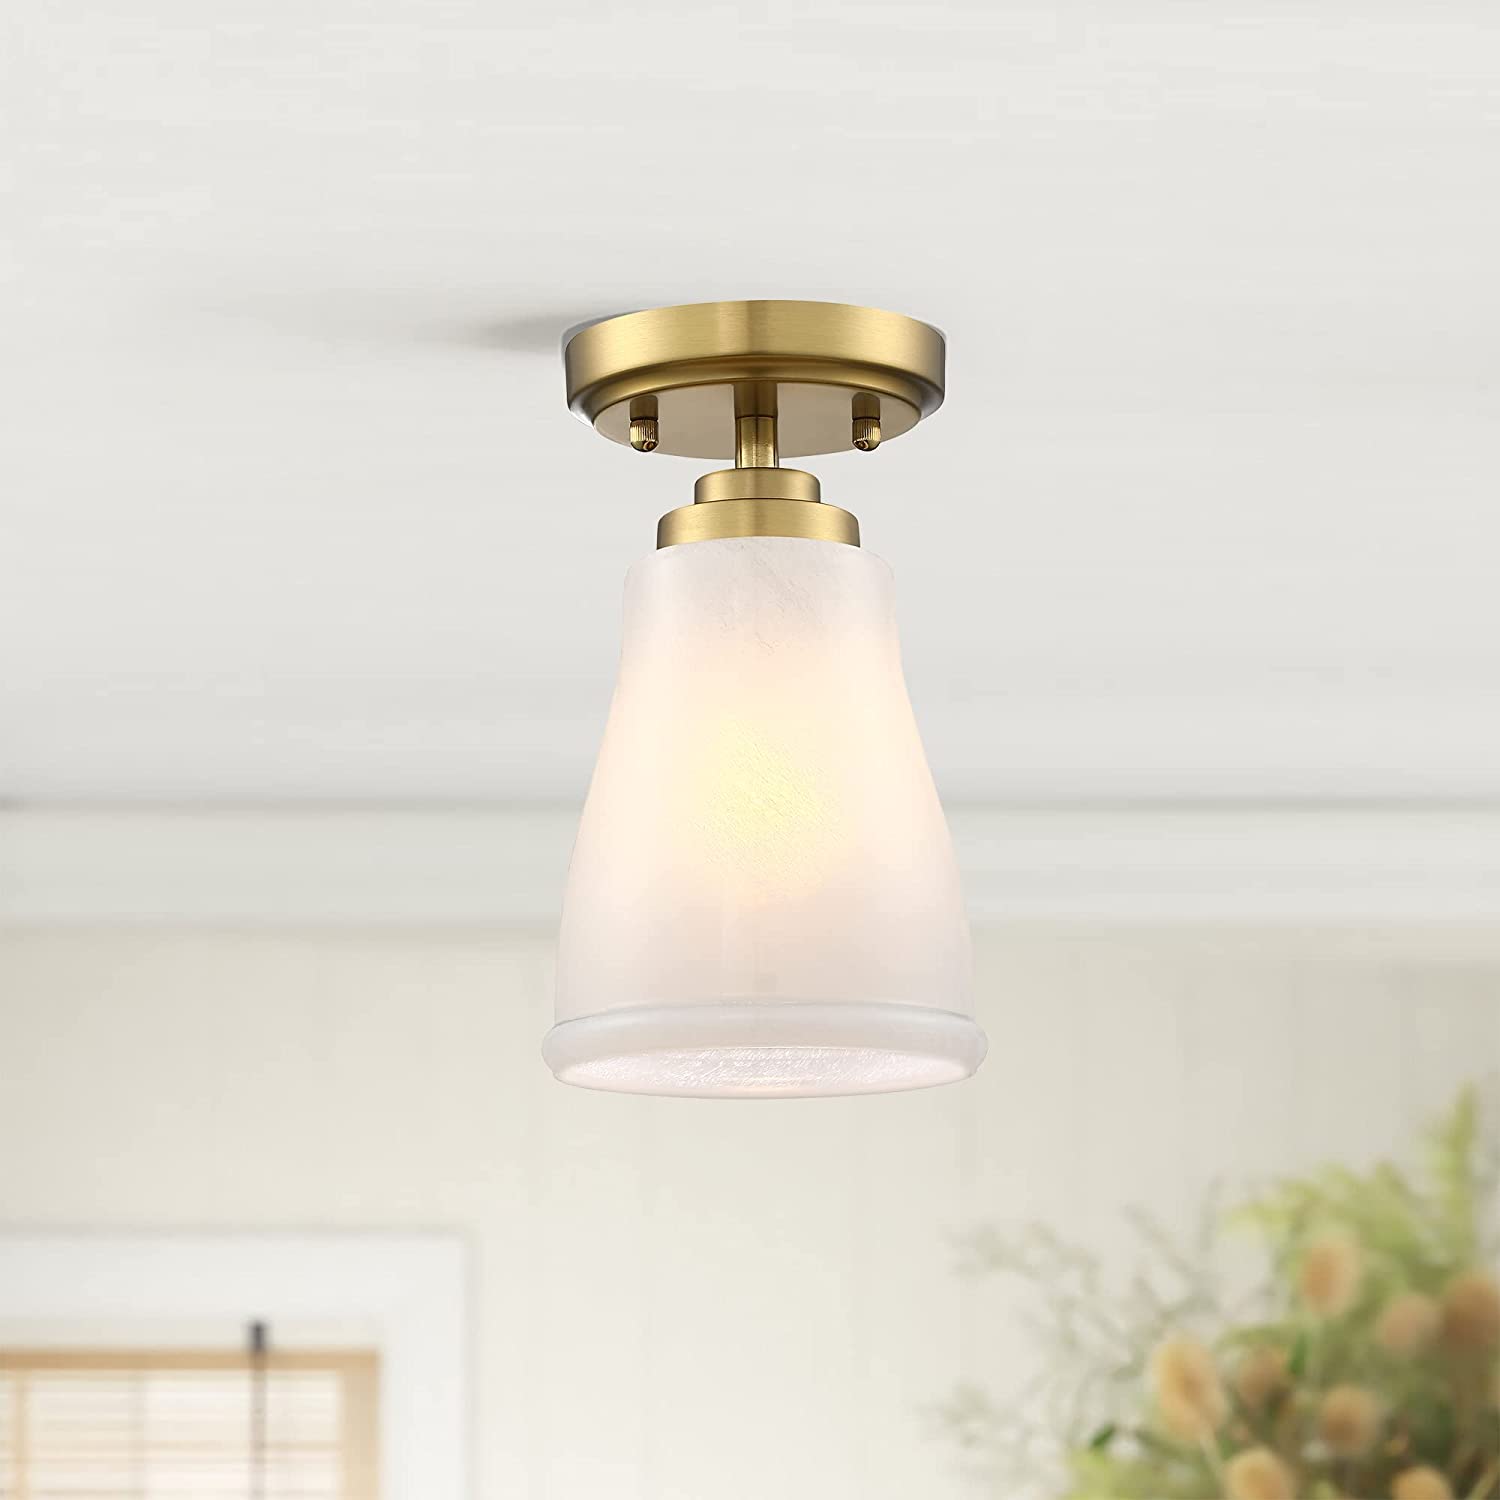 Mini Semi Flush Mount Ceiling Light antique glass ceiling light fixture with gold finish